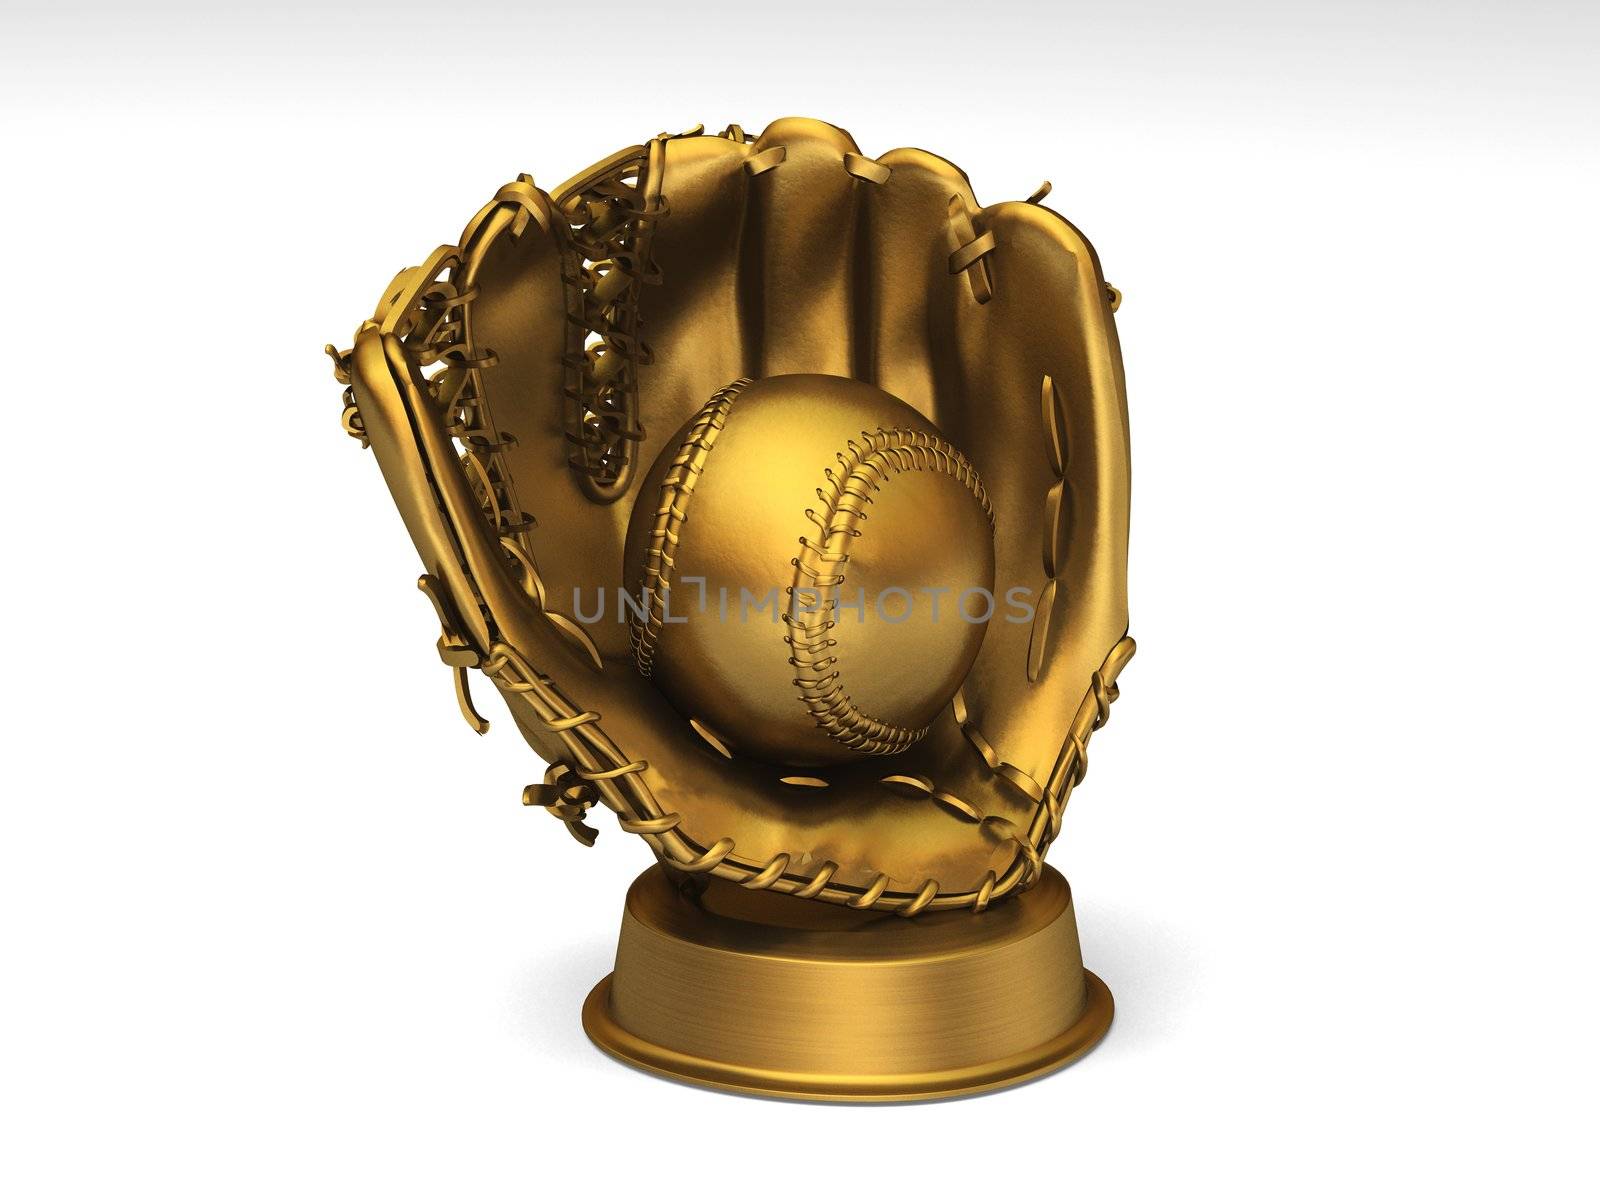 Golden baseball trophy by shkyo30